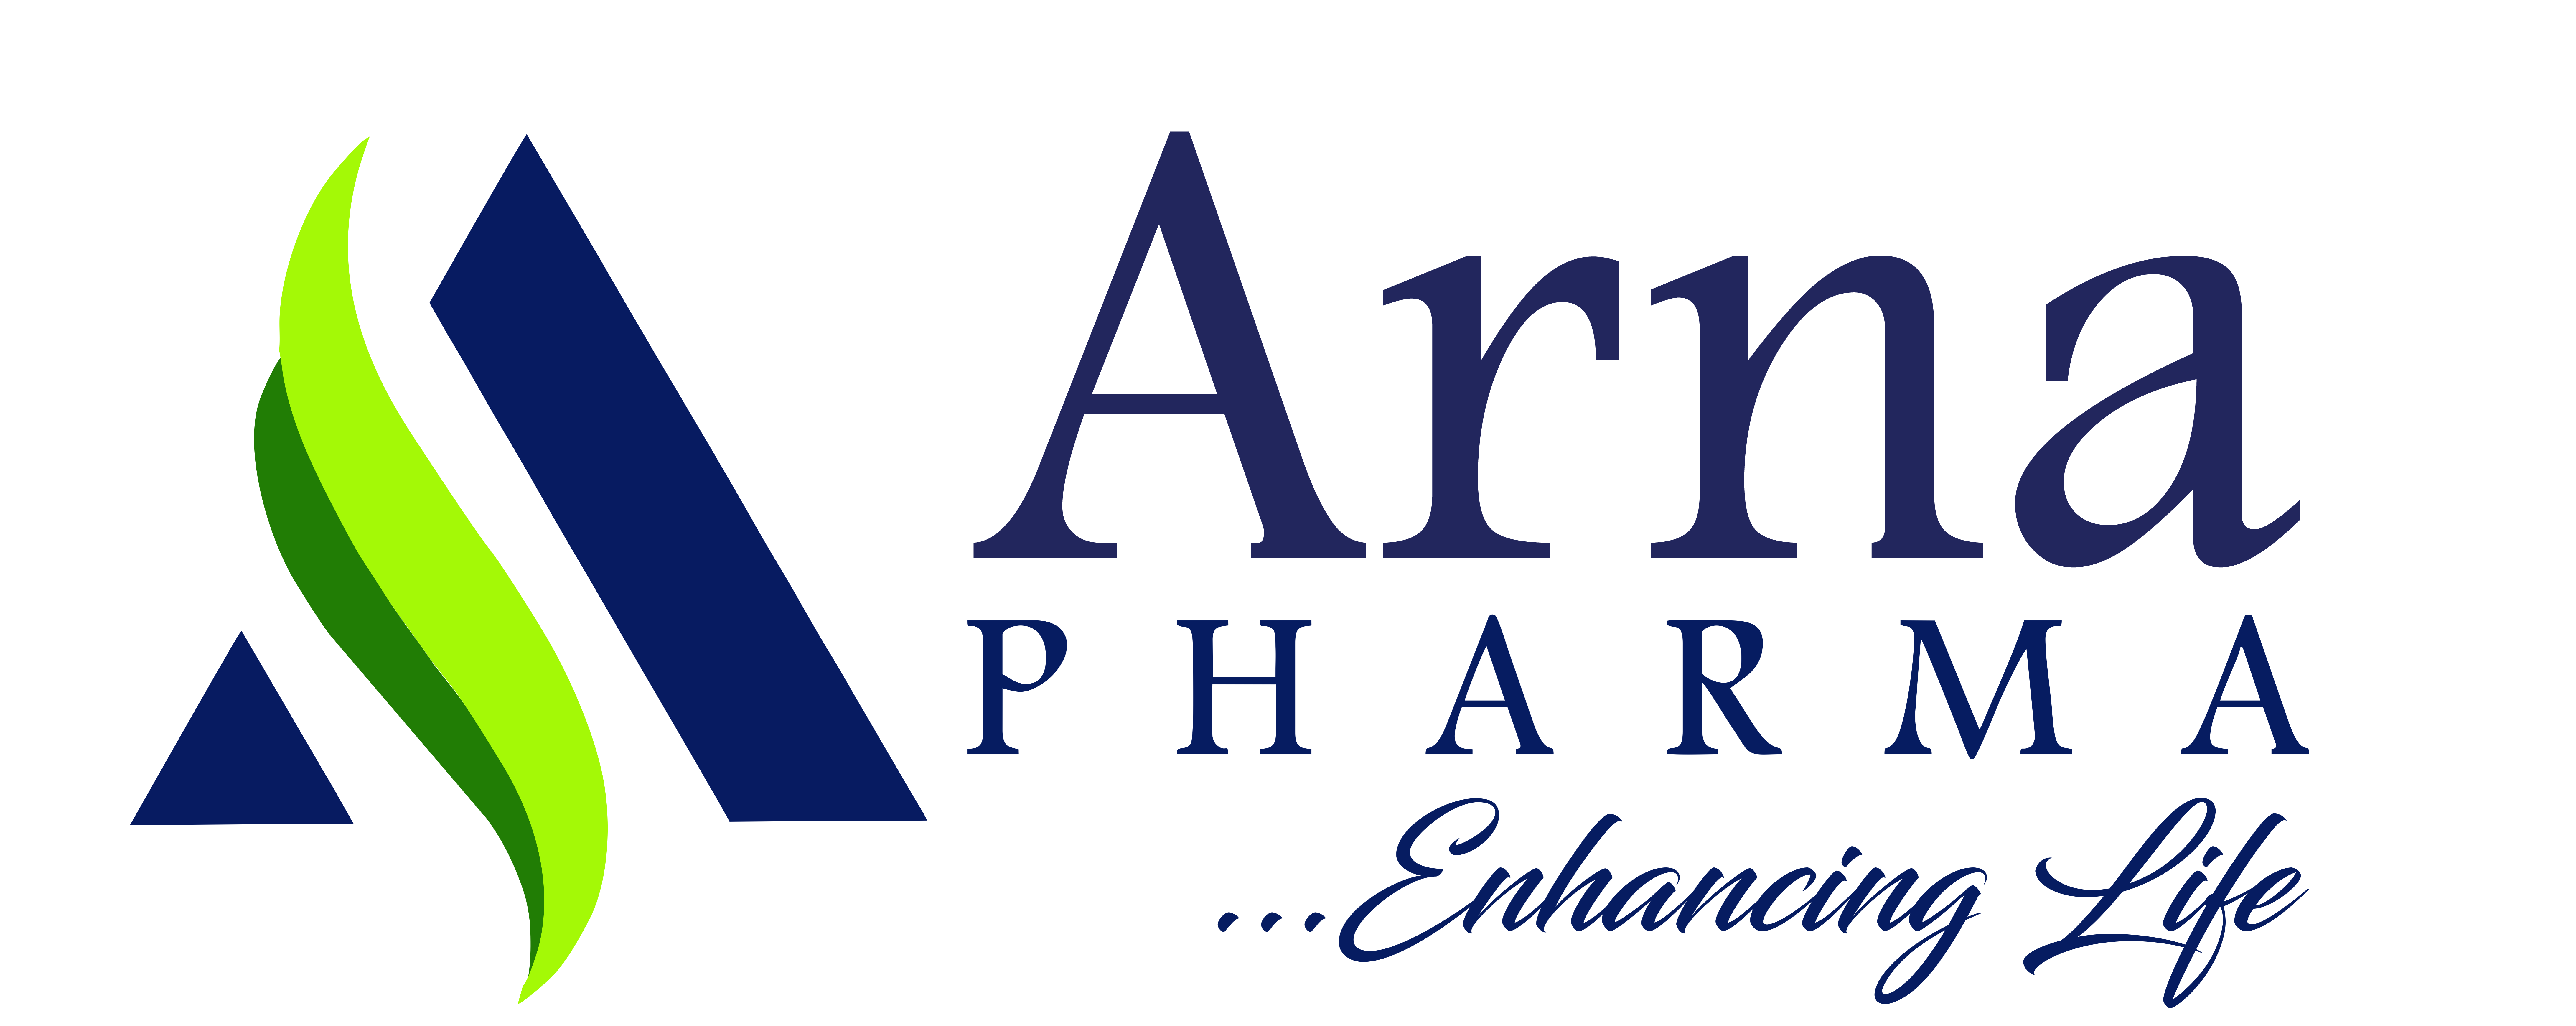 Arna Pharma Pty Ltd